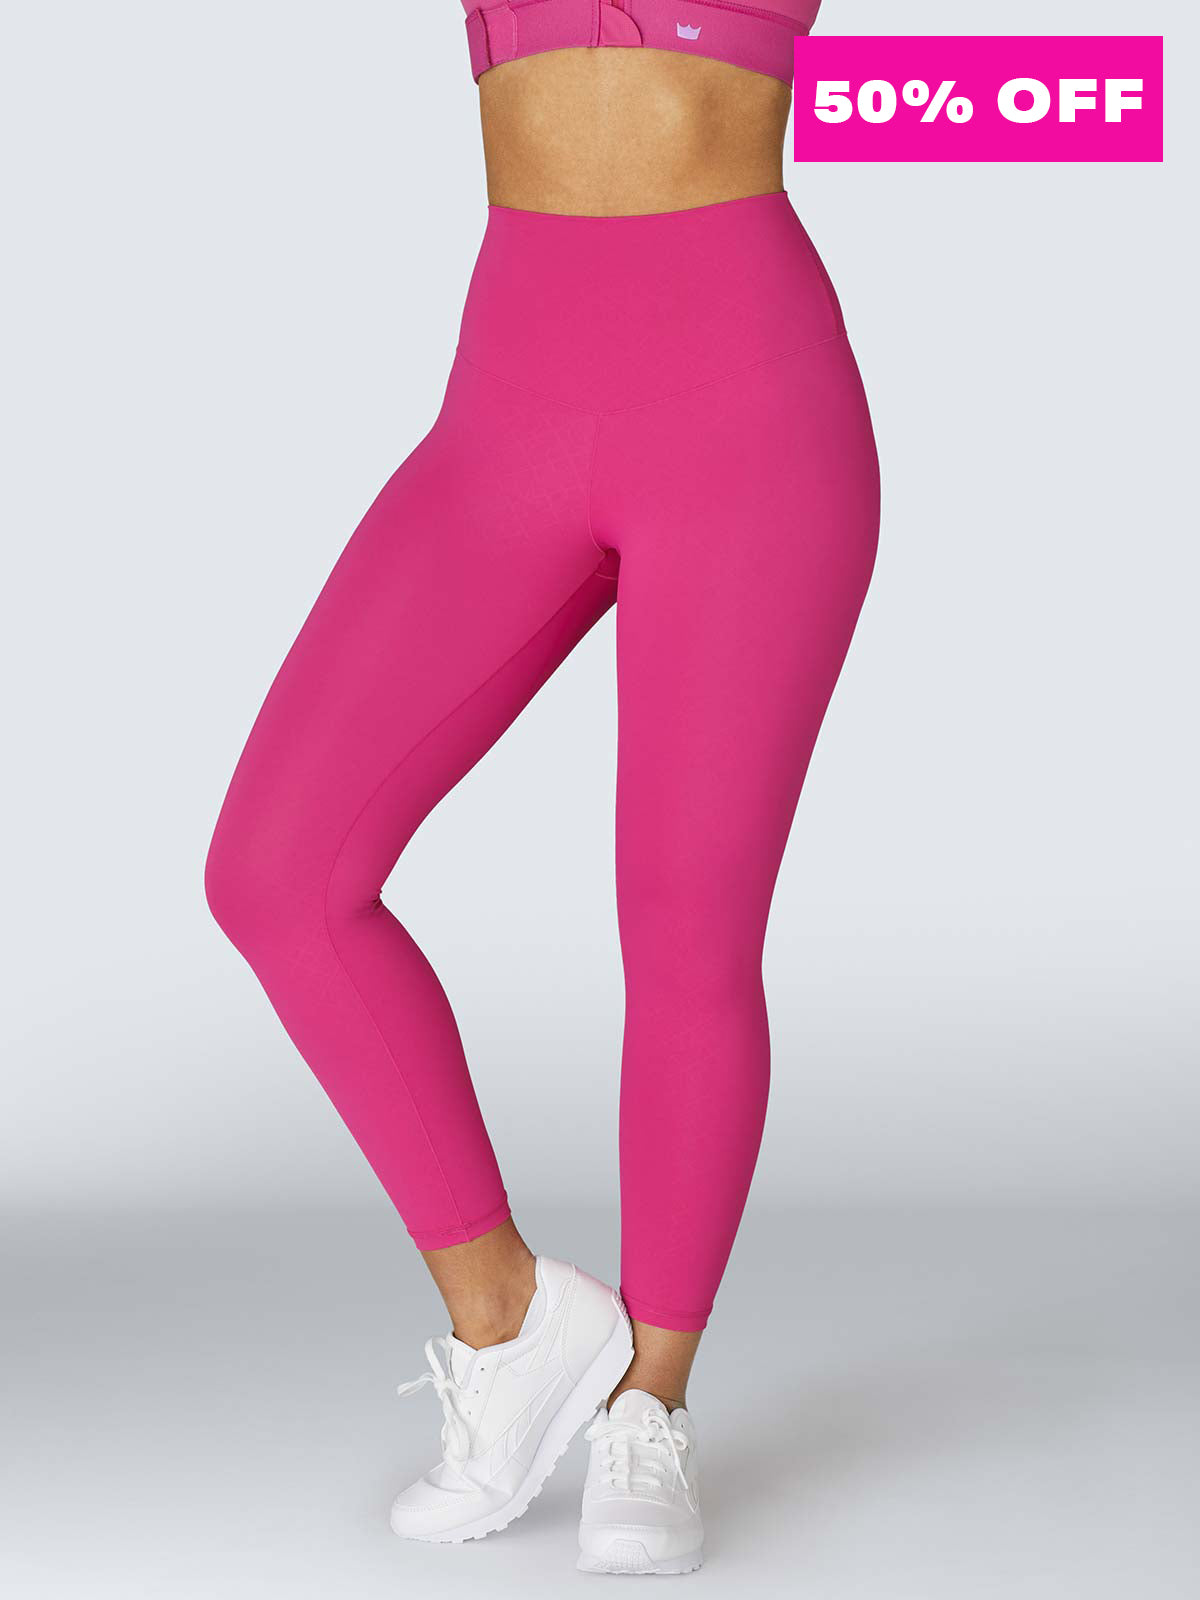 Electric Yoga Basic Leggings for Women (Hot Pink, Large) at  Women's  Clothing store